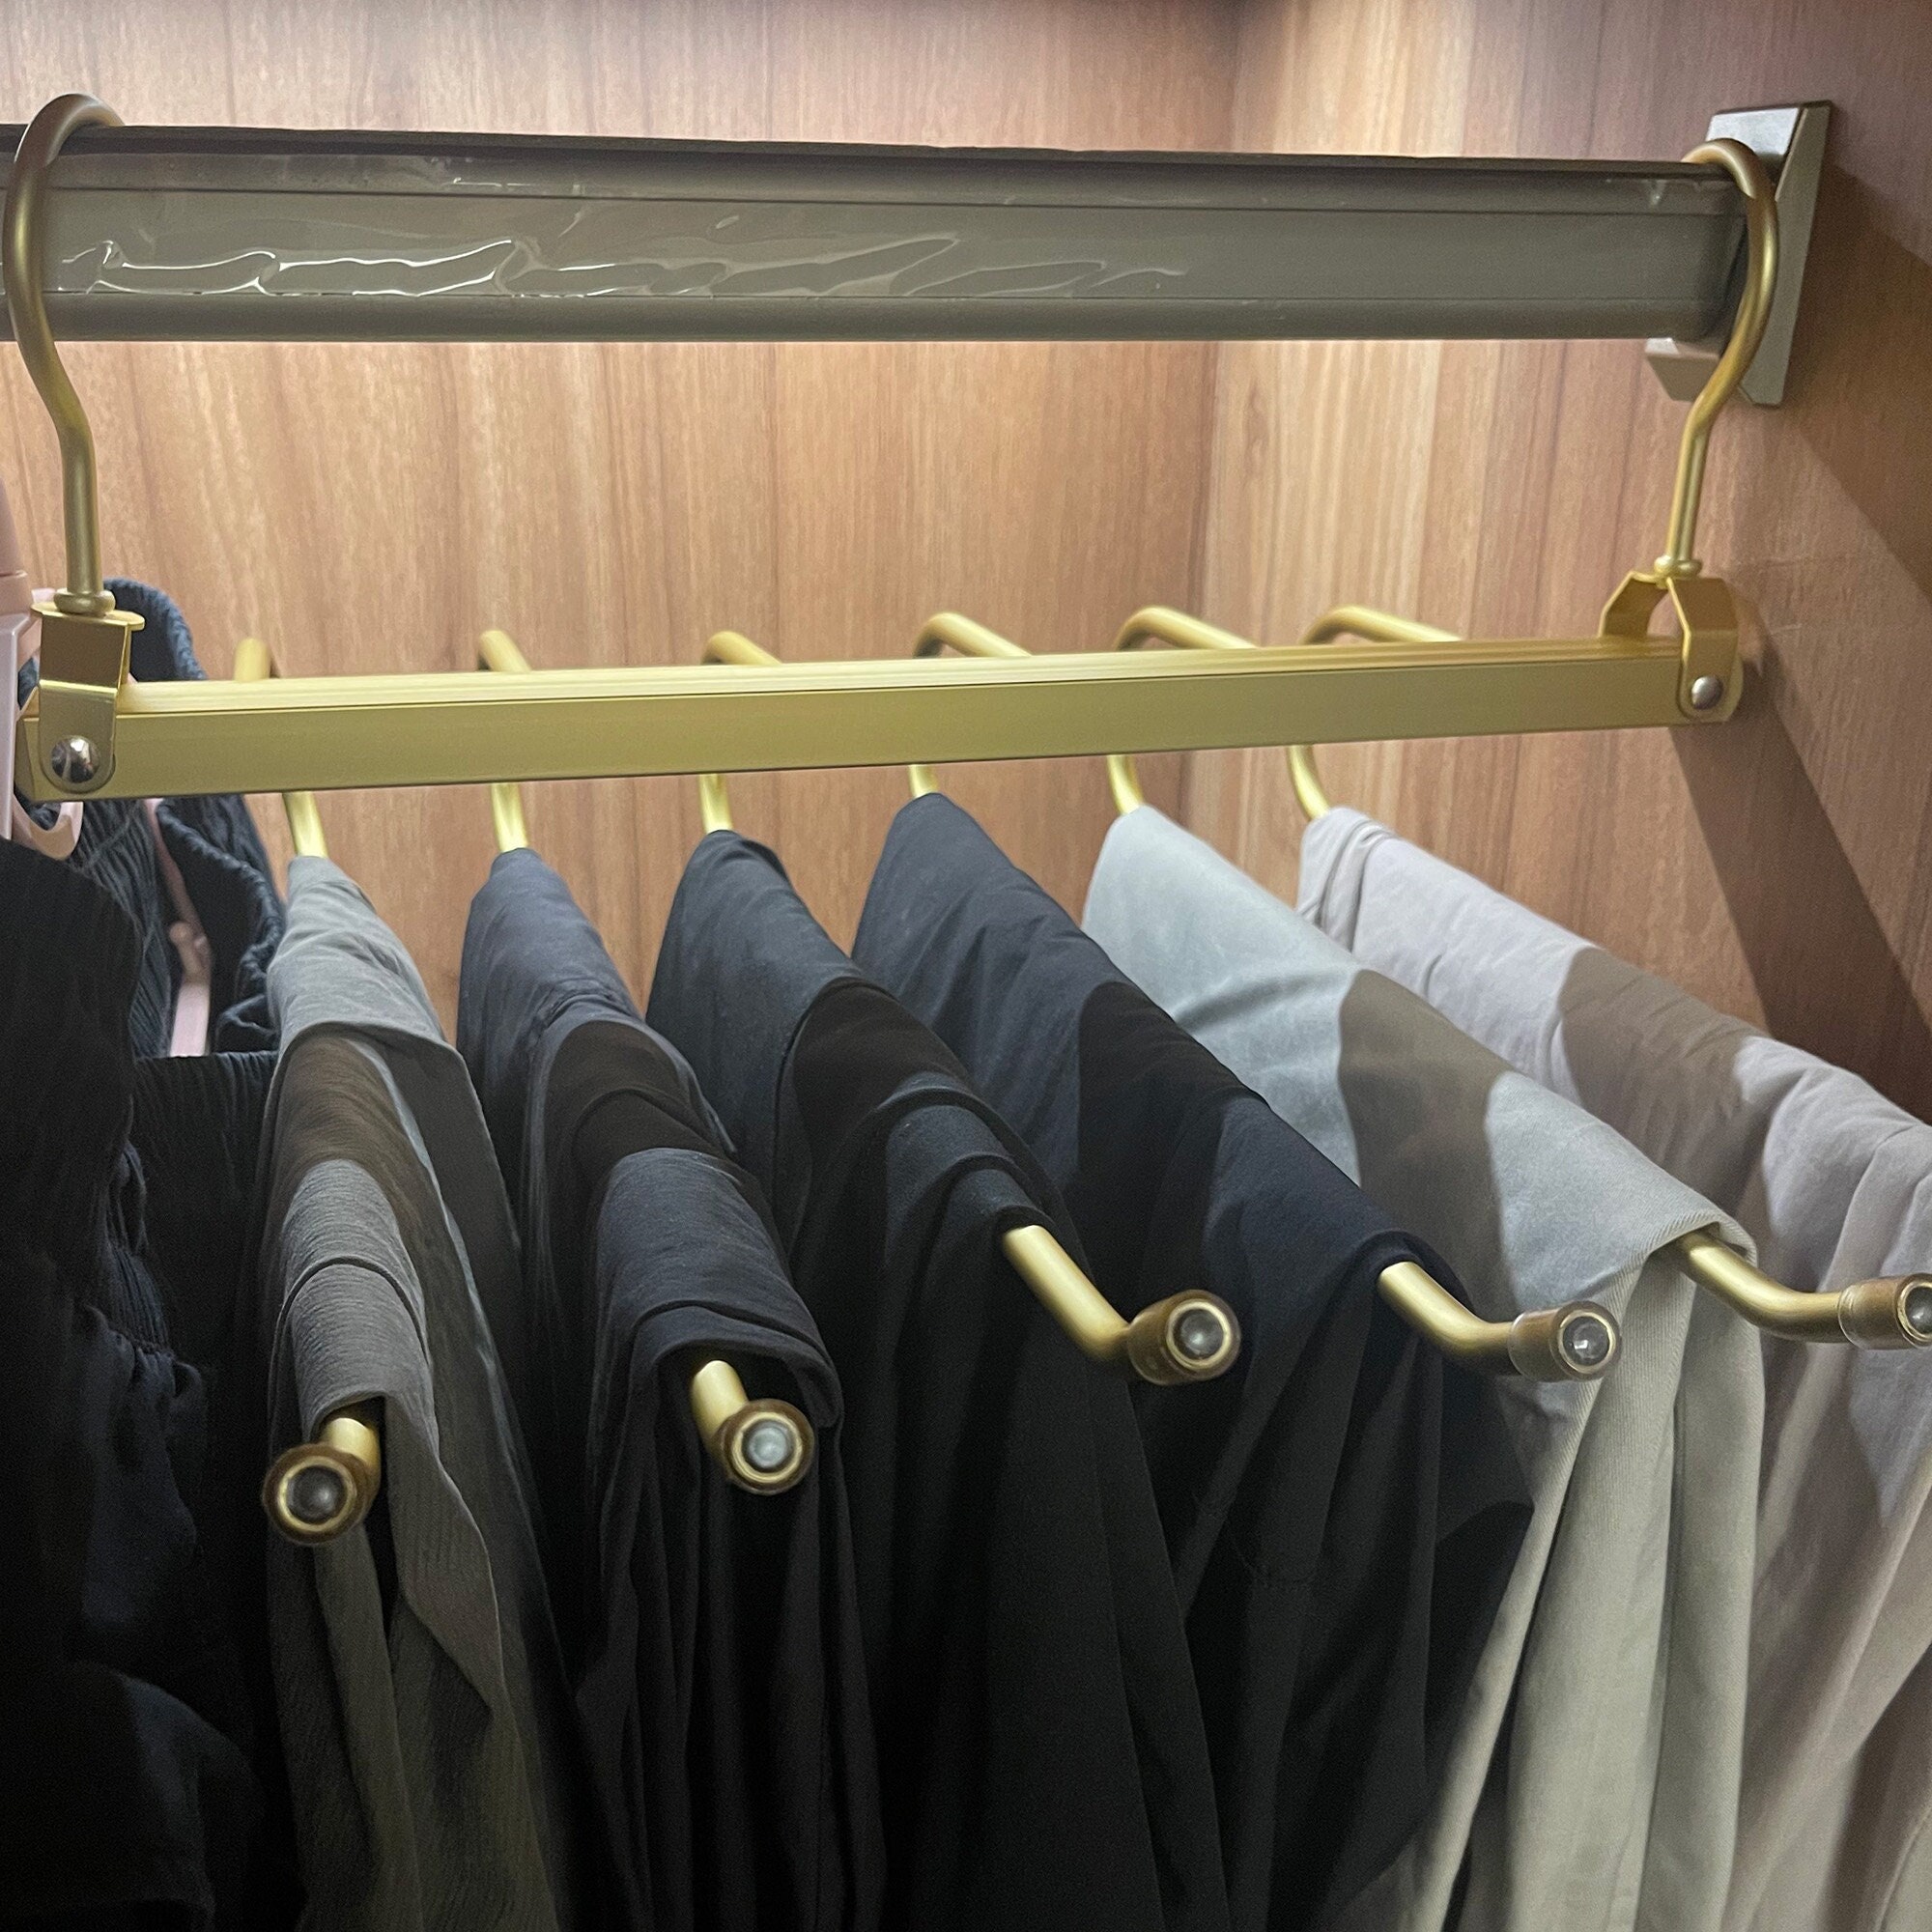 MORALVE Space Saving Hangers for Closet Organizer - 4 Pack European Beechwood Shirt Organizer for Closet - Space Saver Hangers for Clothes - Closet